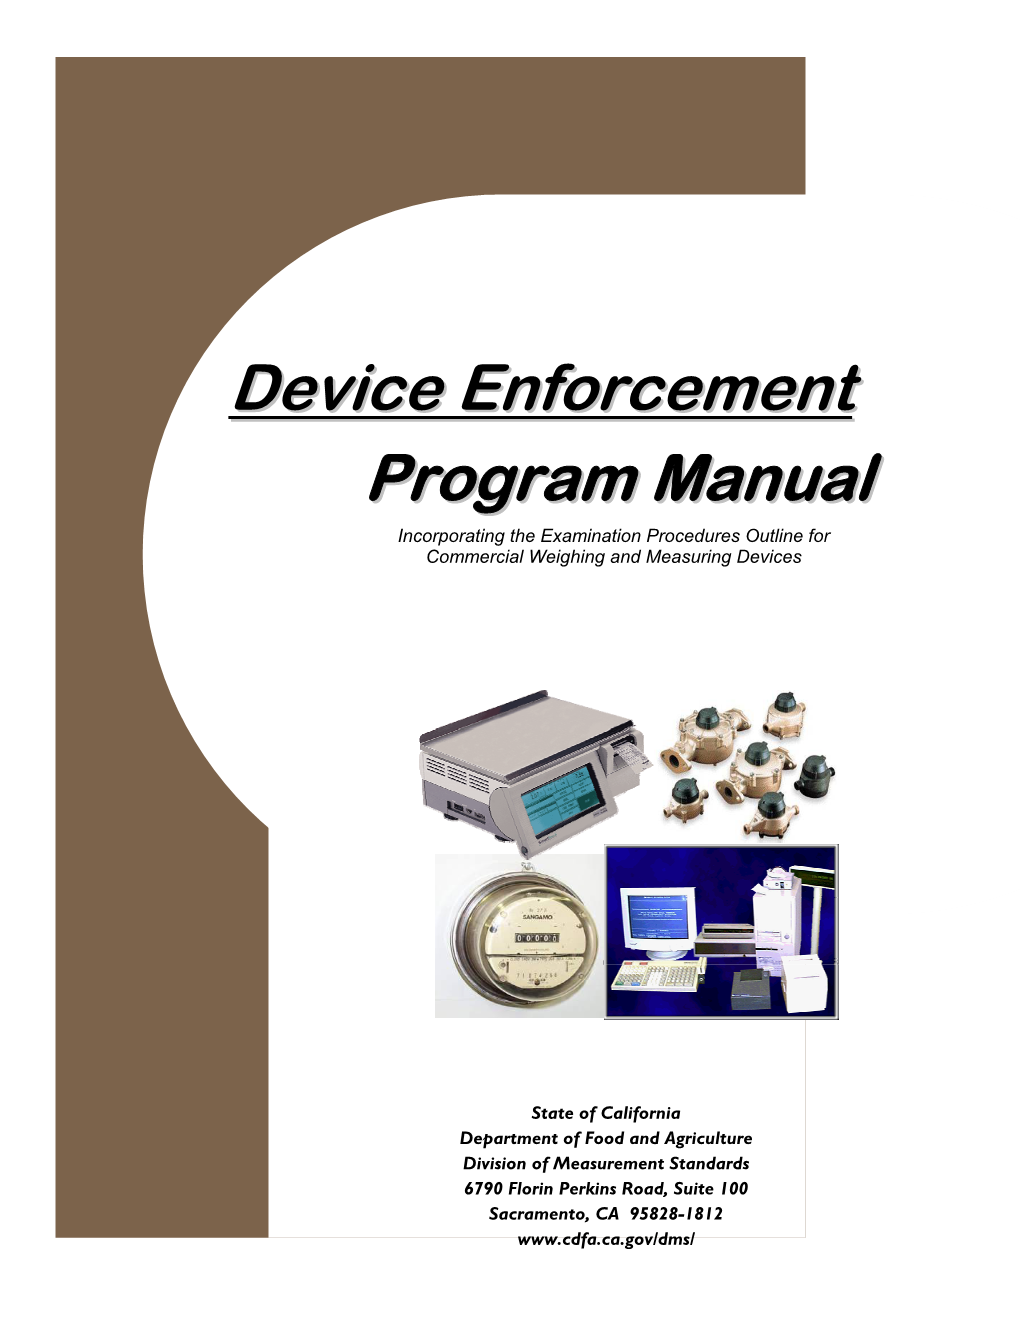 Device Enforcement Program Manual